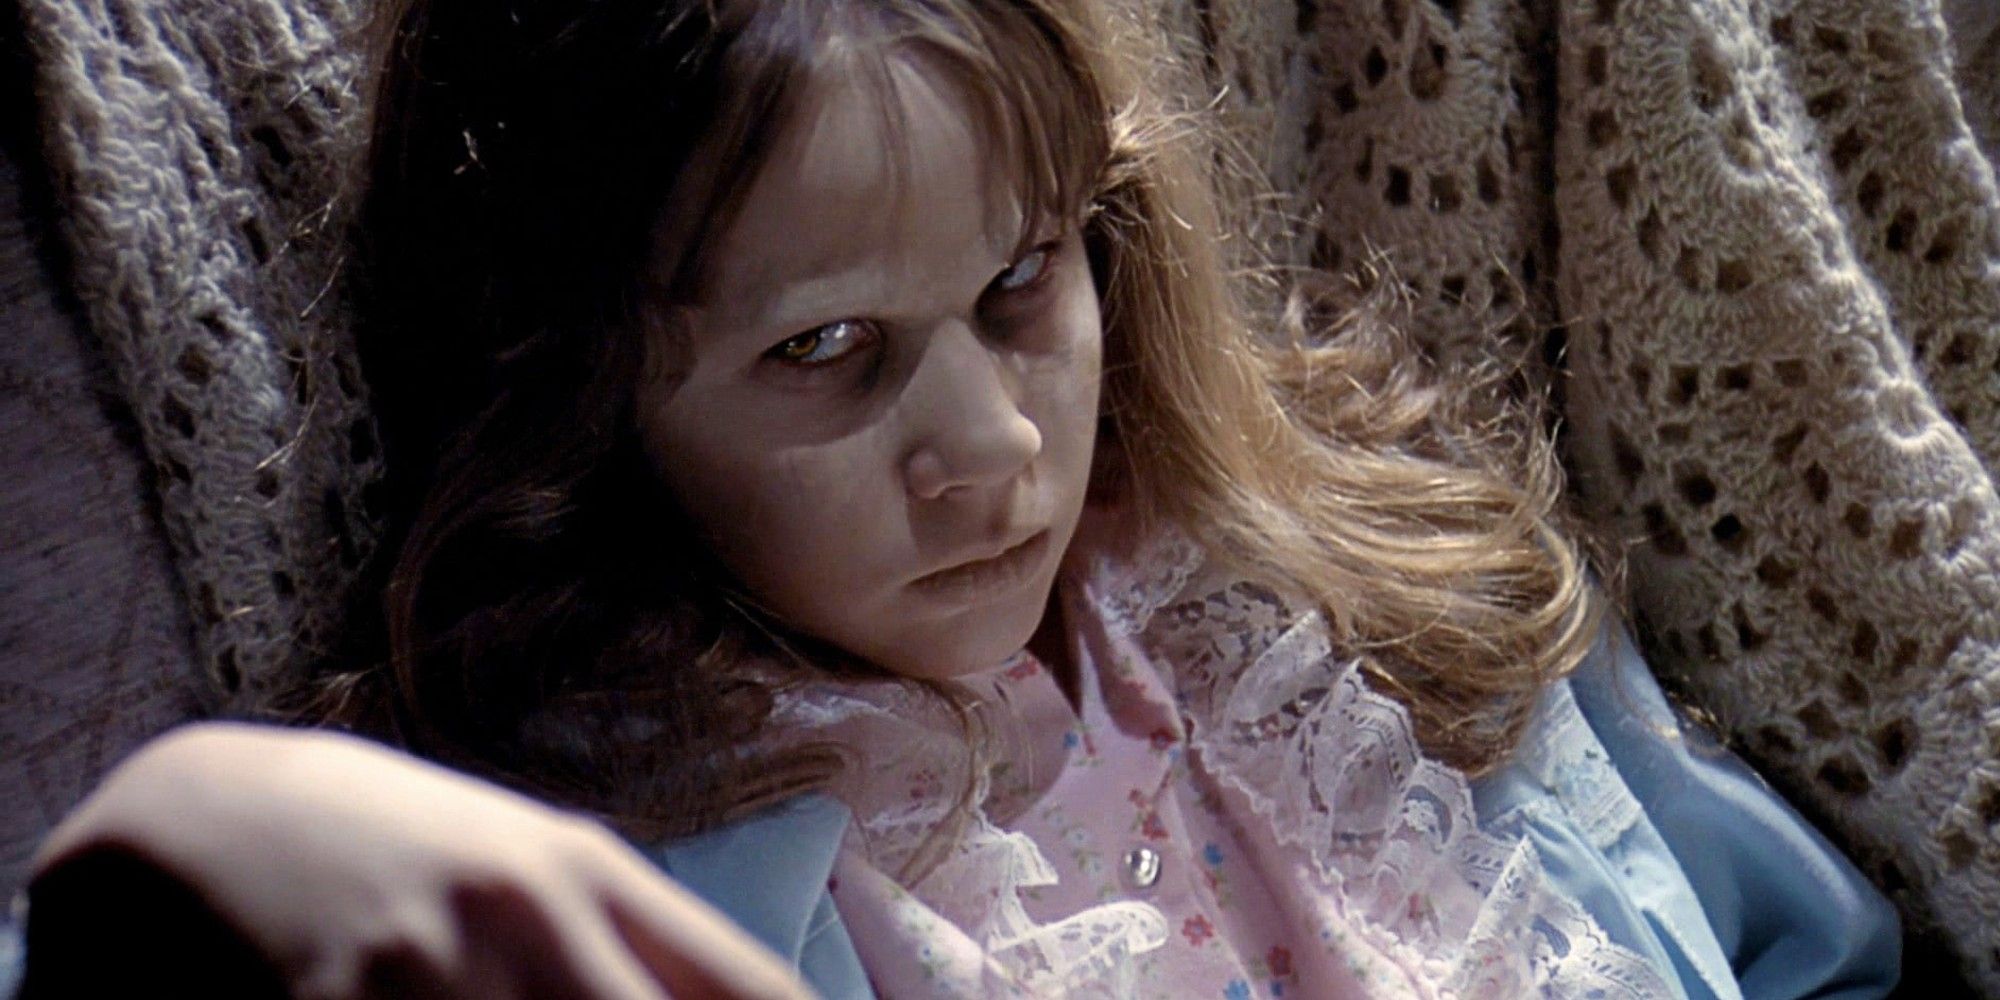 Linda Blair as Regan McNeill in The Exorcist